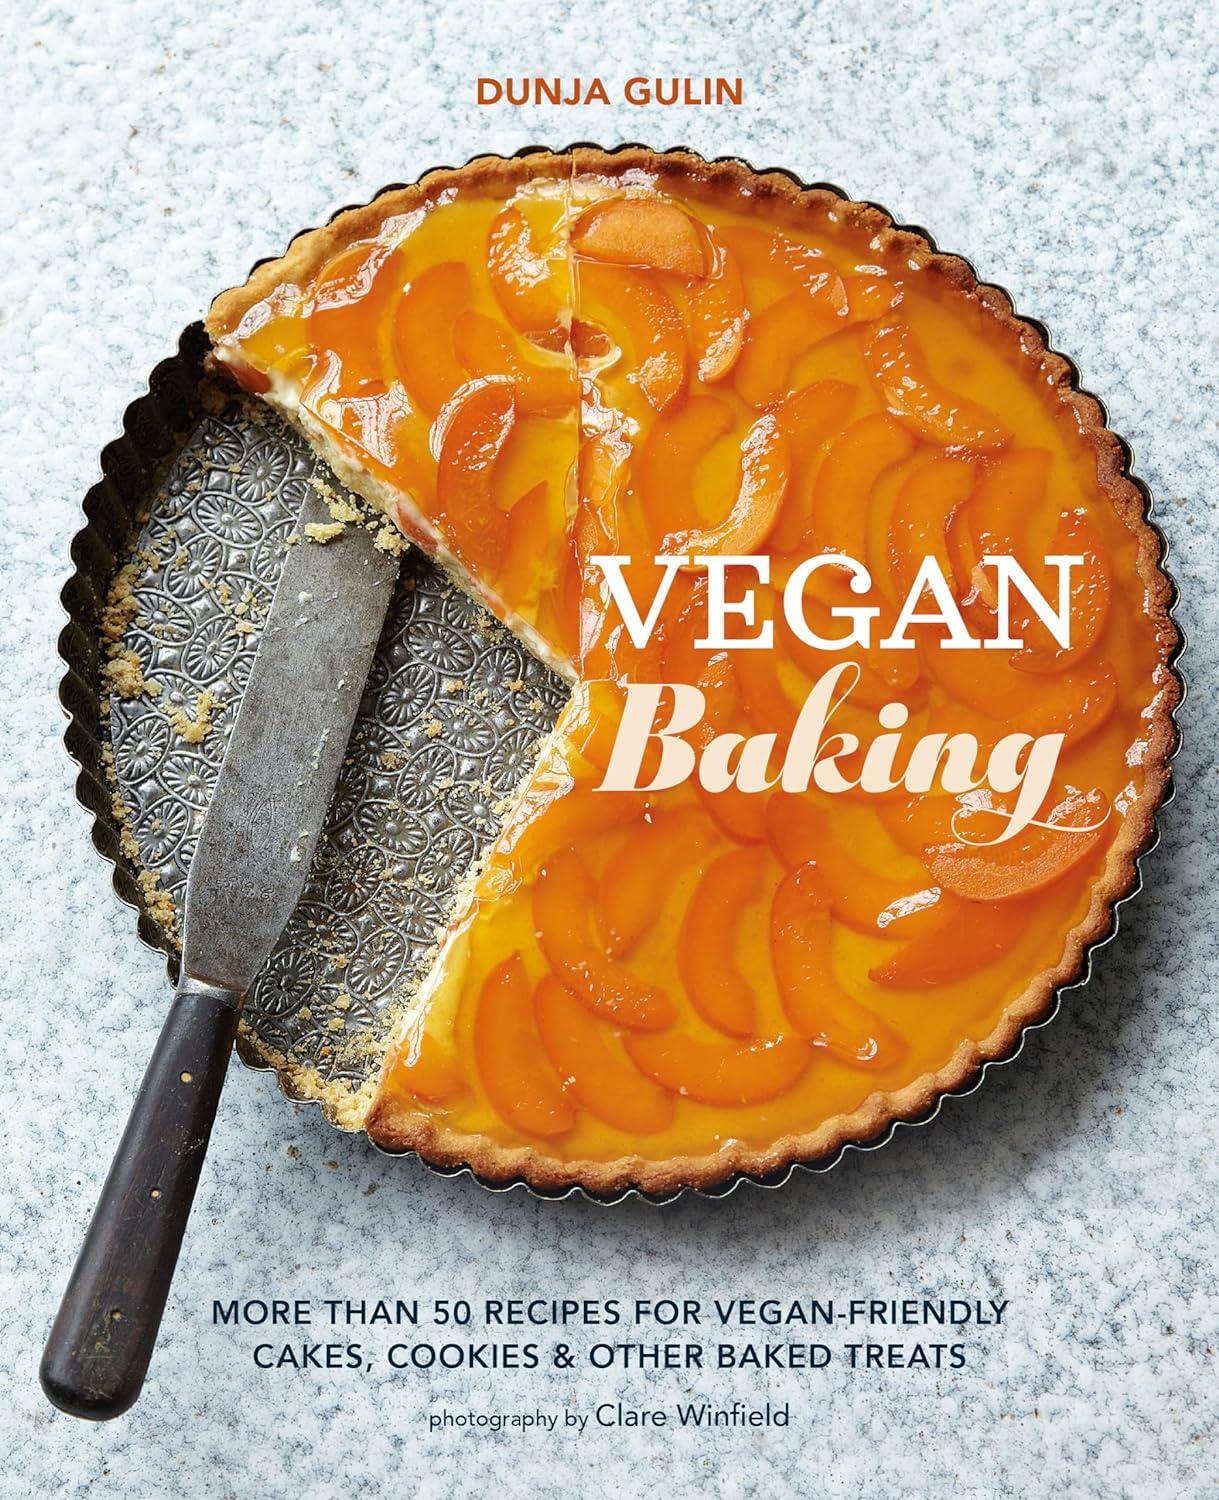 Vegan Baking: More Than 50 Recipes for Vegan-Friendly Cakes, Cookies & Other Baked Treats (Dunja Gulin)